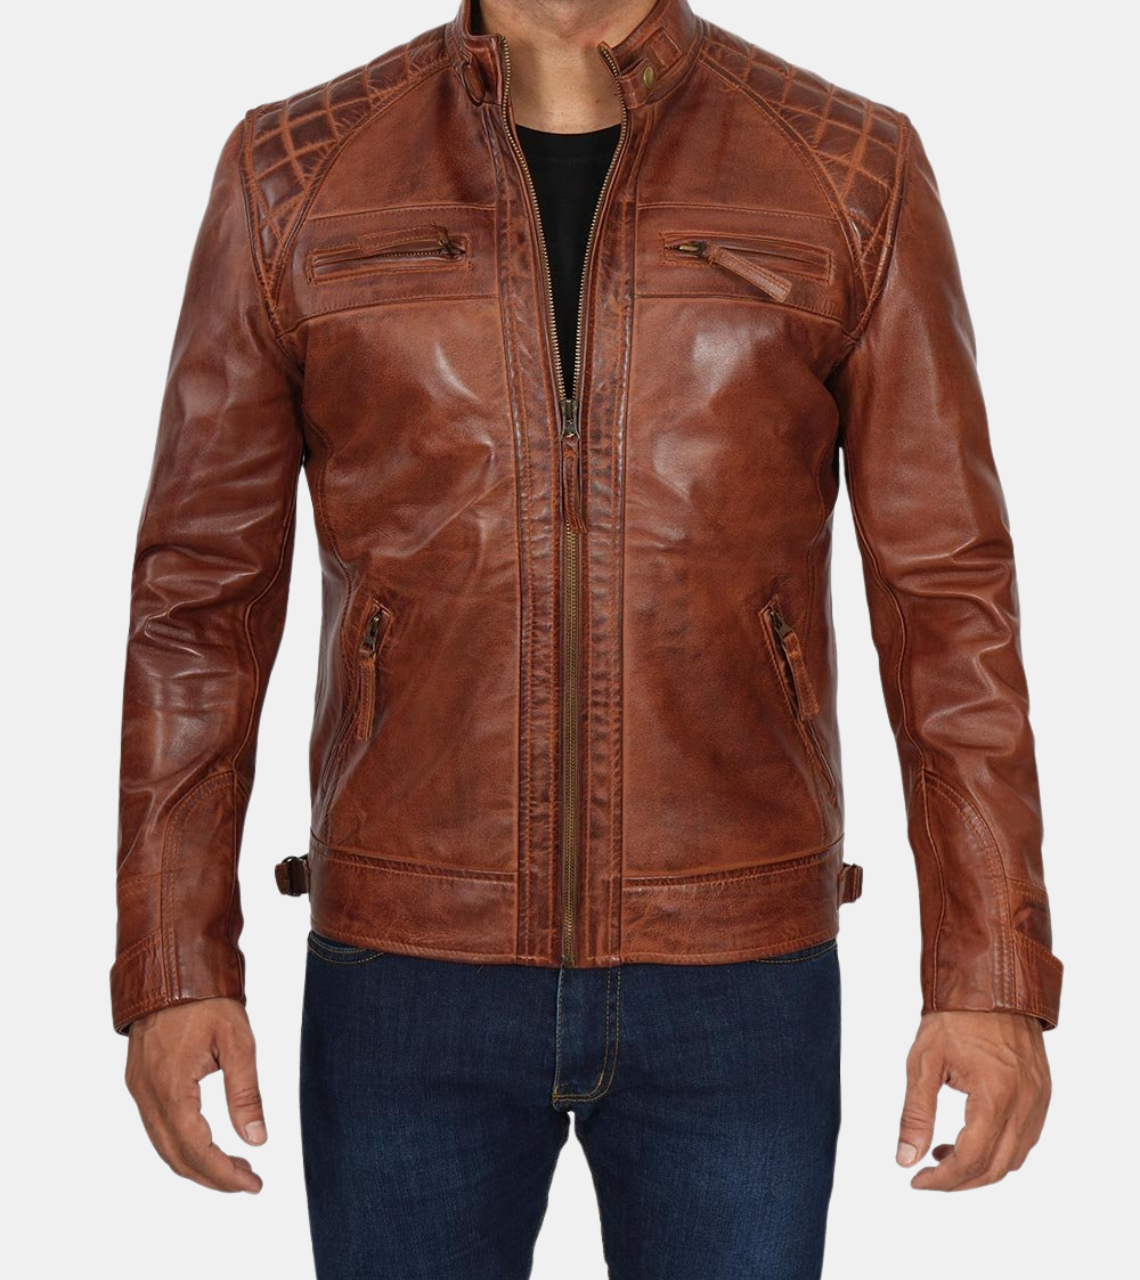  Brown Distressed Leather Jacket